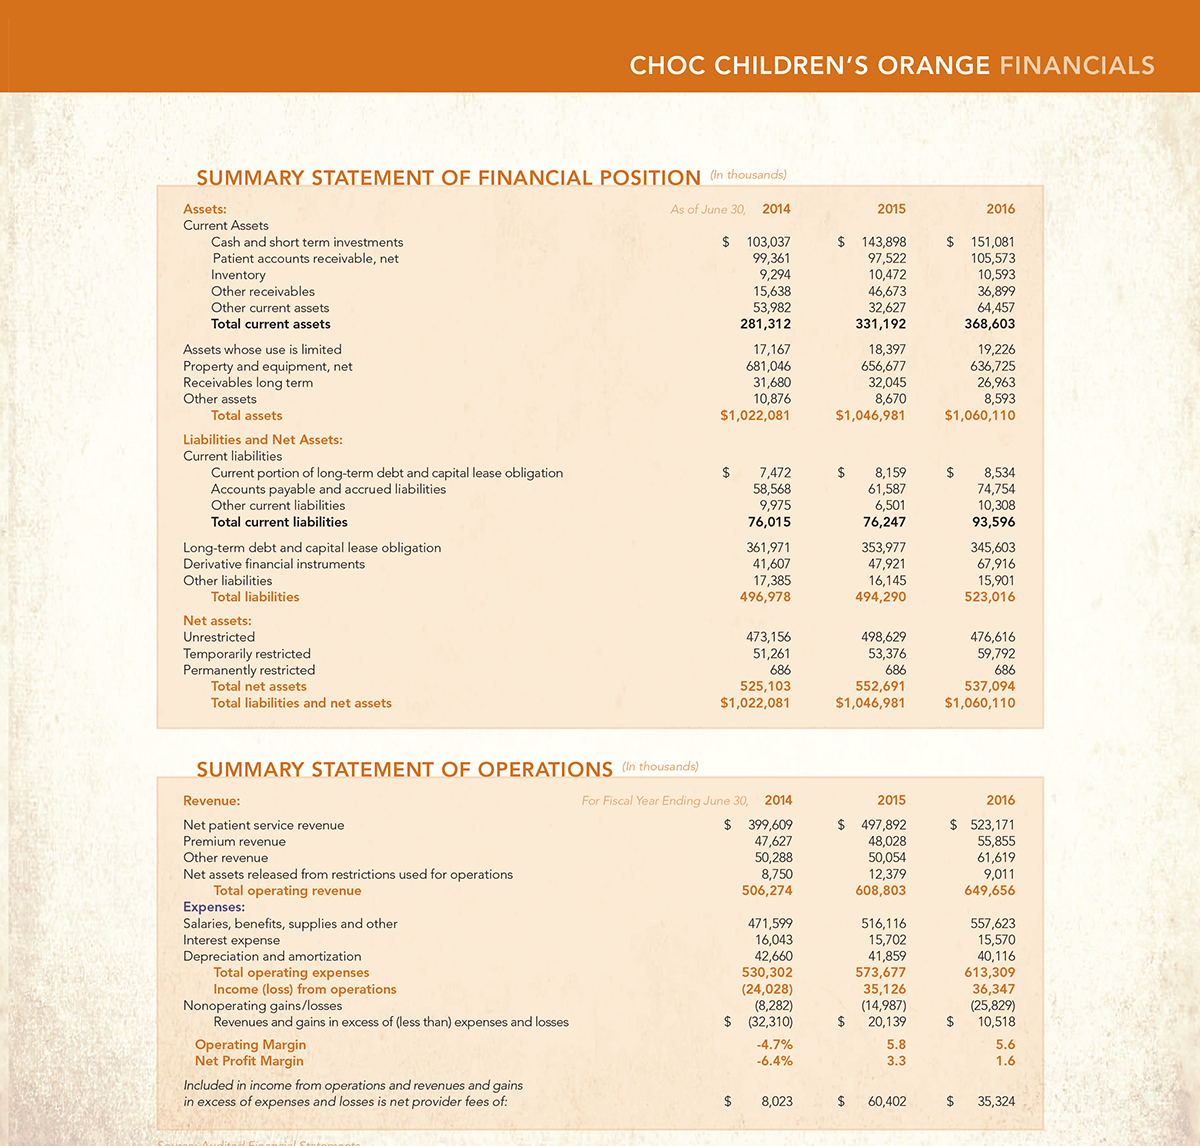 Annual Report 2016 CHOC Children's Financials